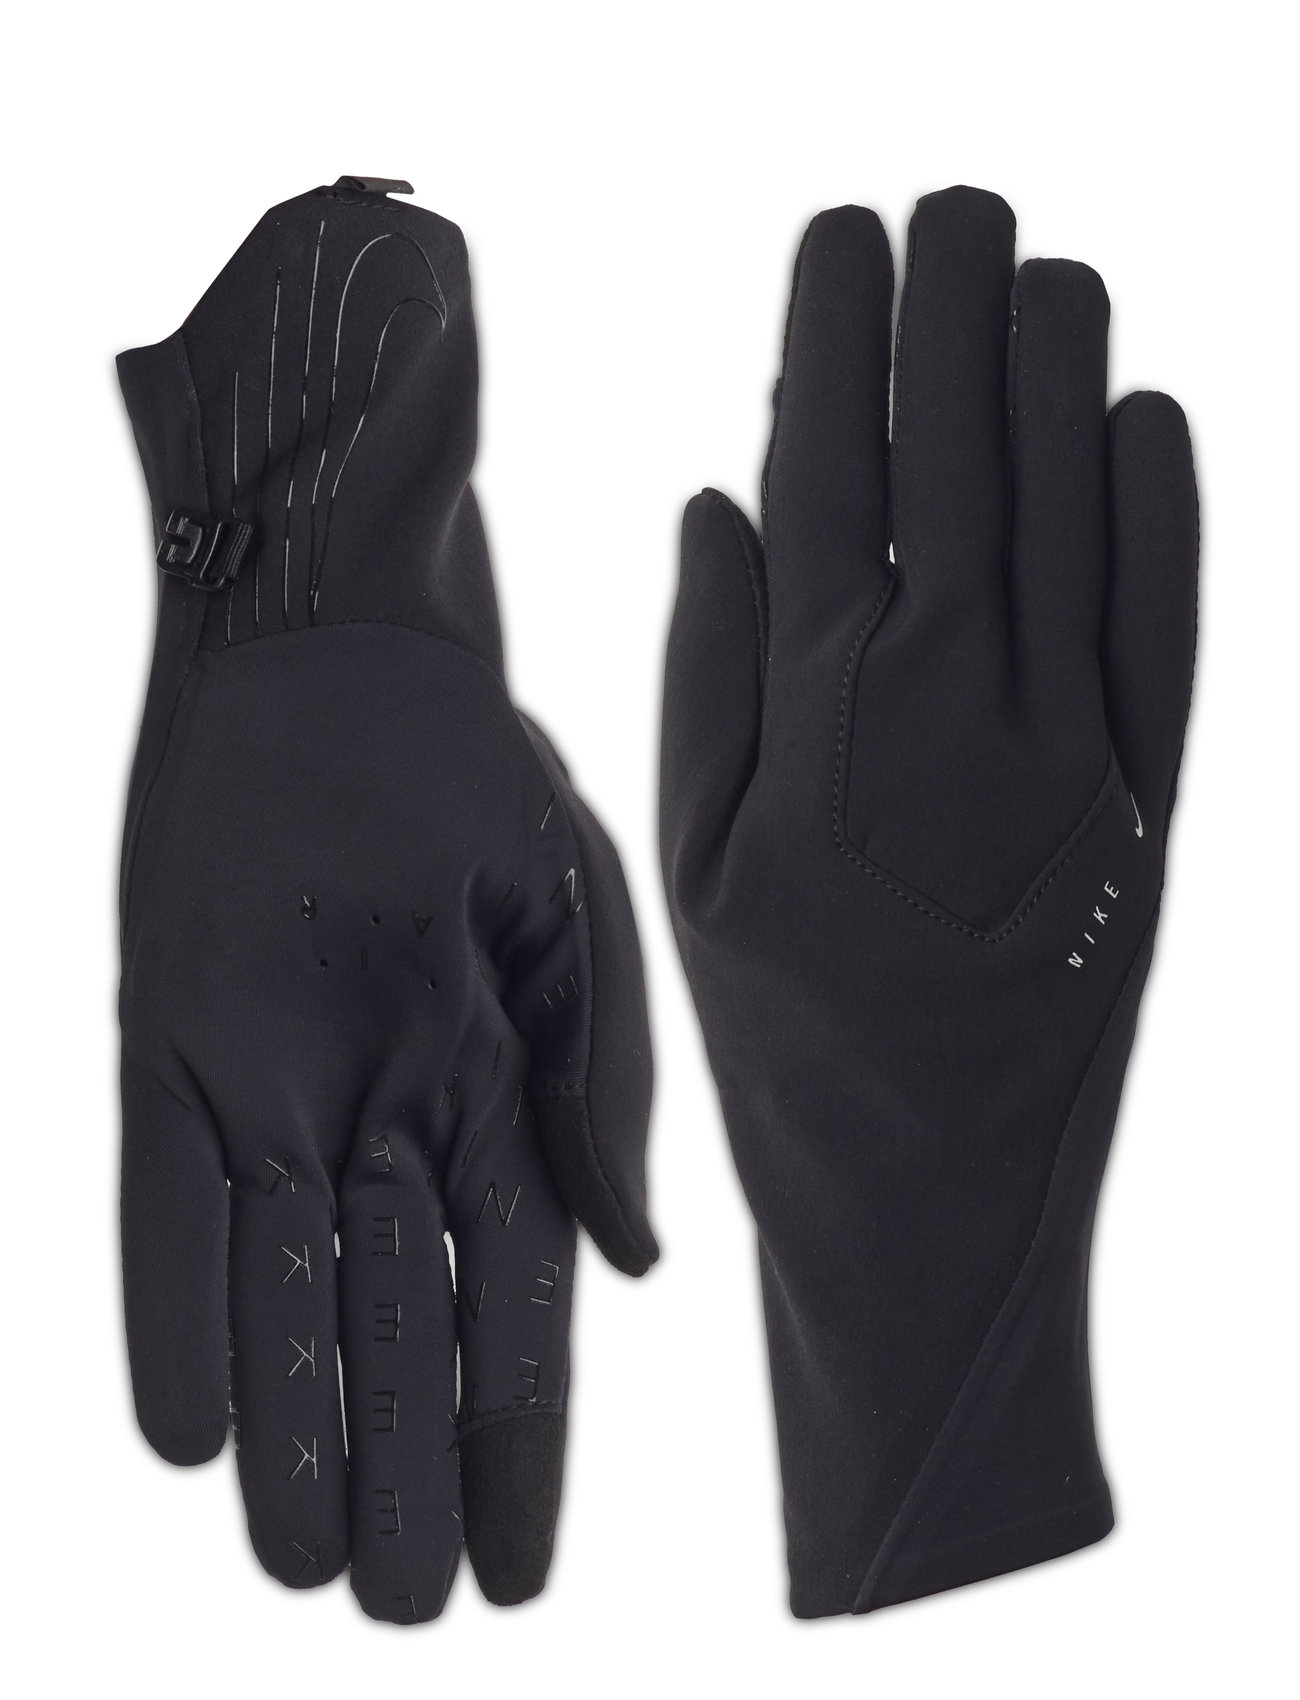 Nike Wmns Shield Phenom Running Gloves Sport Sports Equipment Running Accessories Black NIKE Equipment